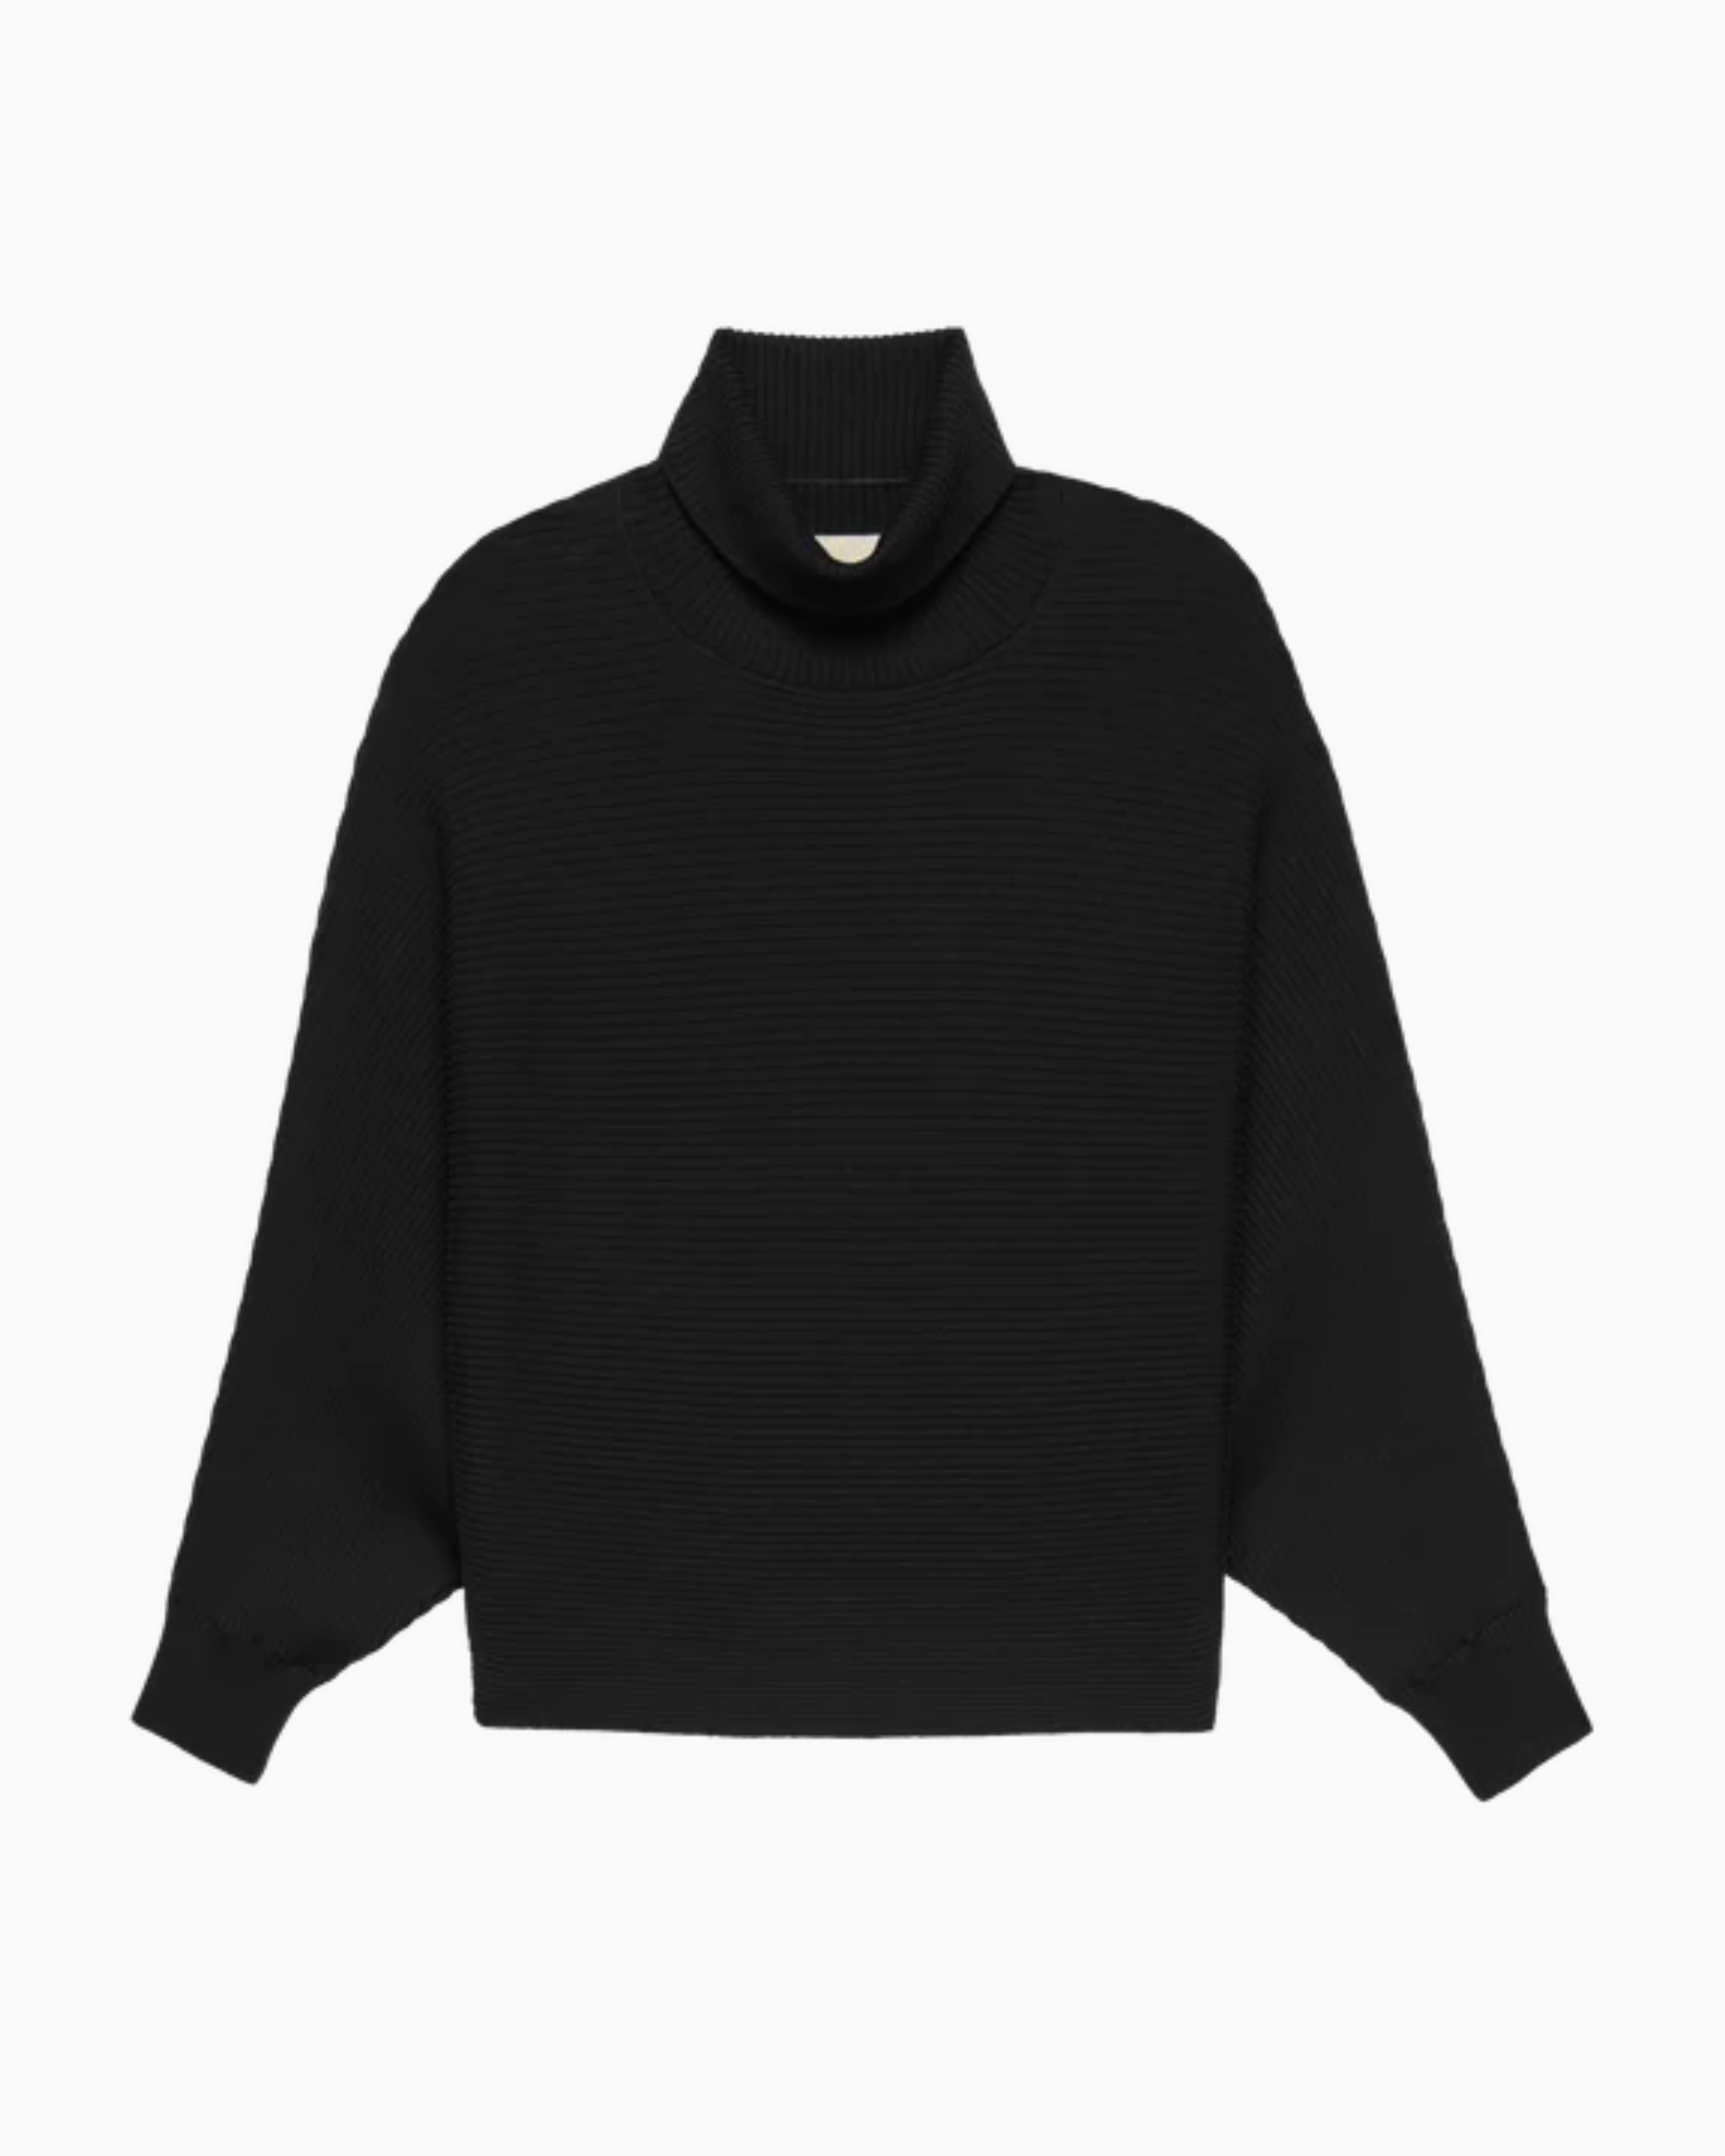 Nation Lane Dolman Sleeve Sweater in Black